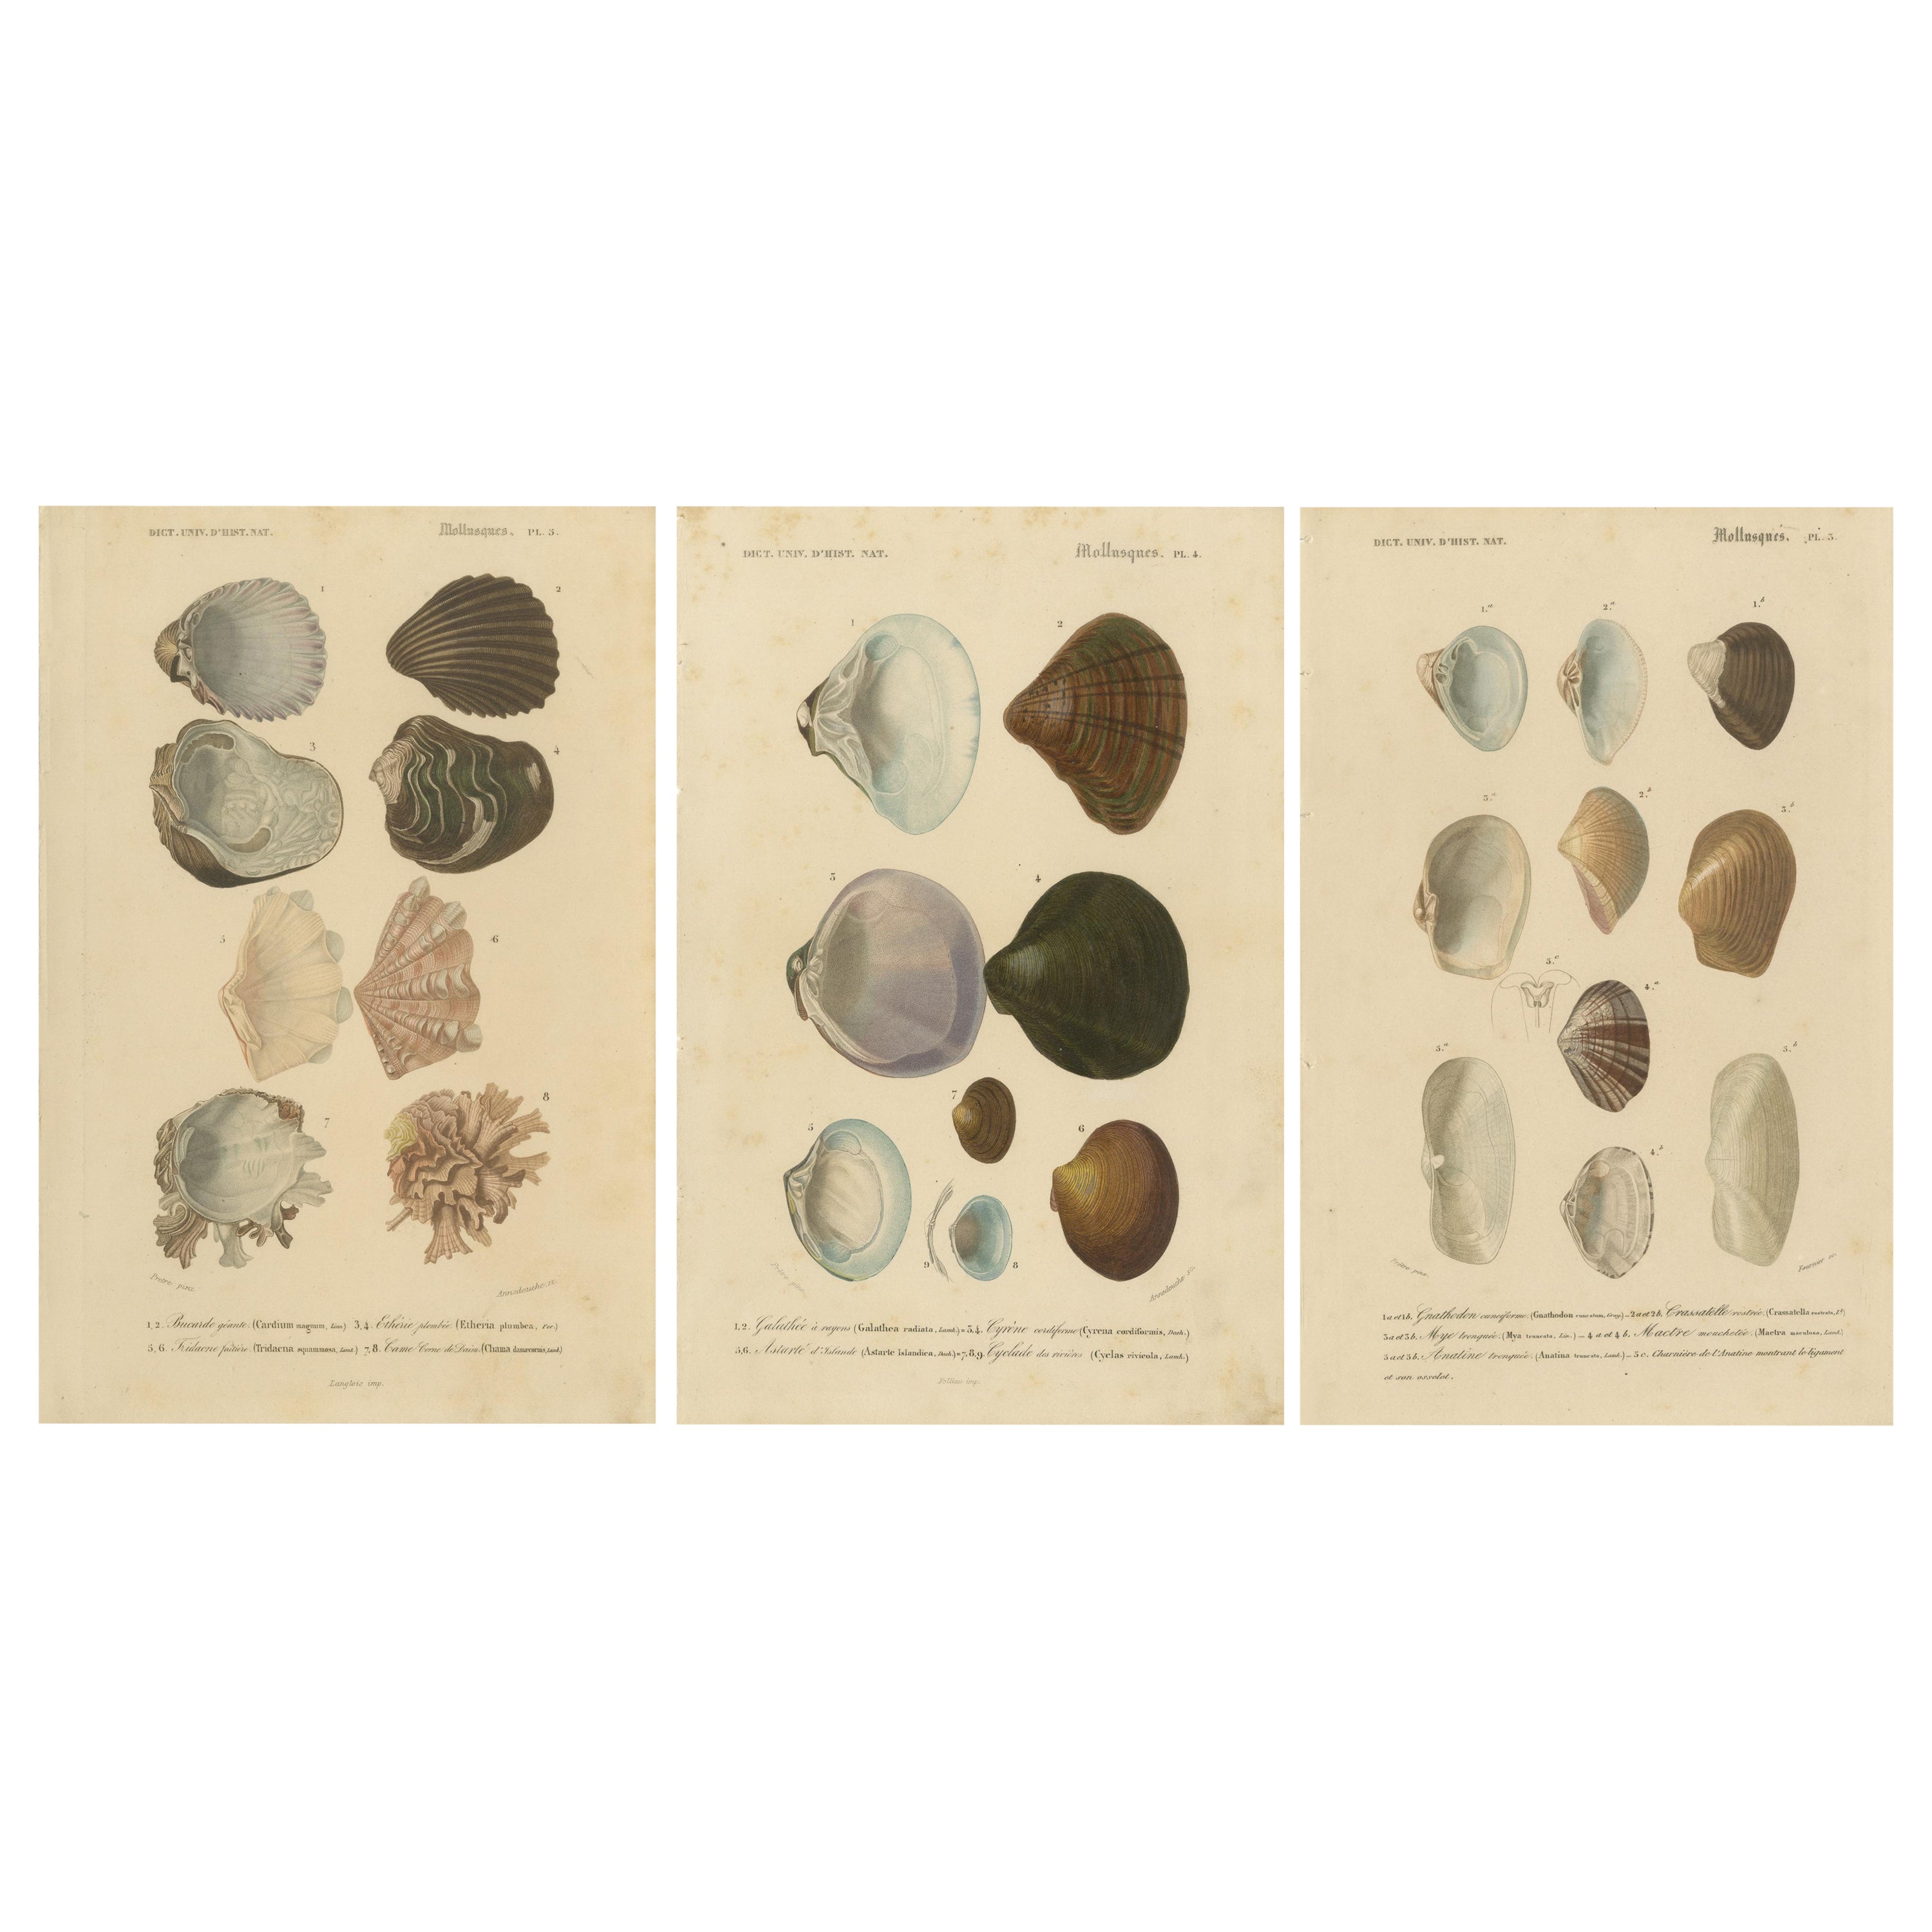 Treasury of Molluscs : Illustrations colorées à la main du 19e siècle